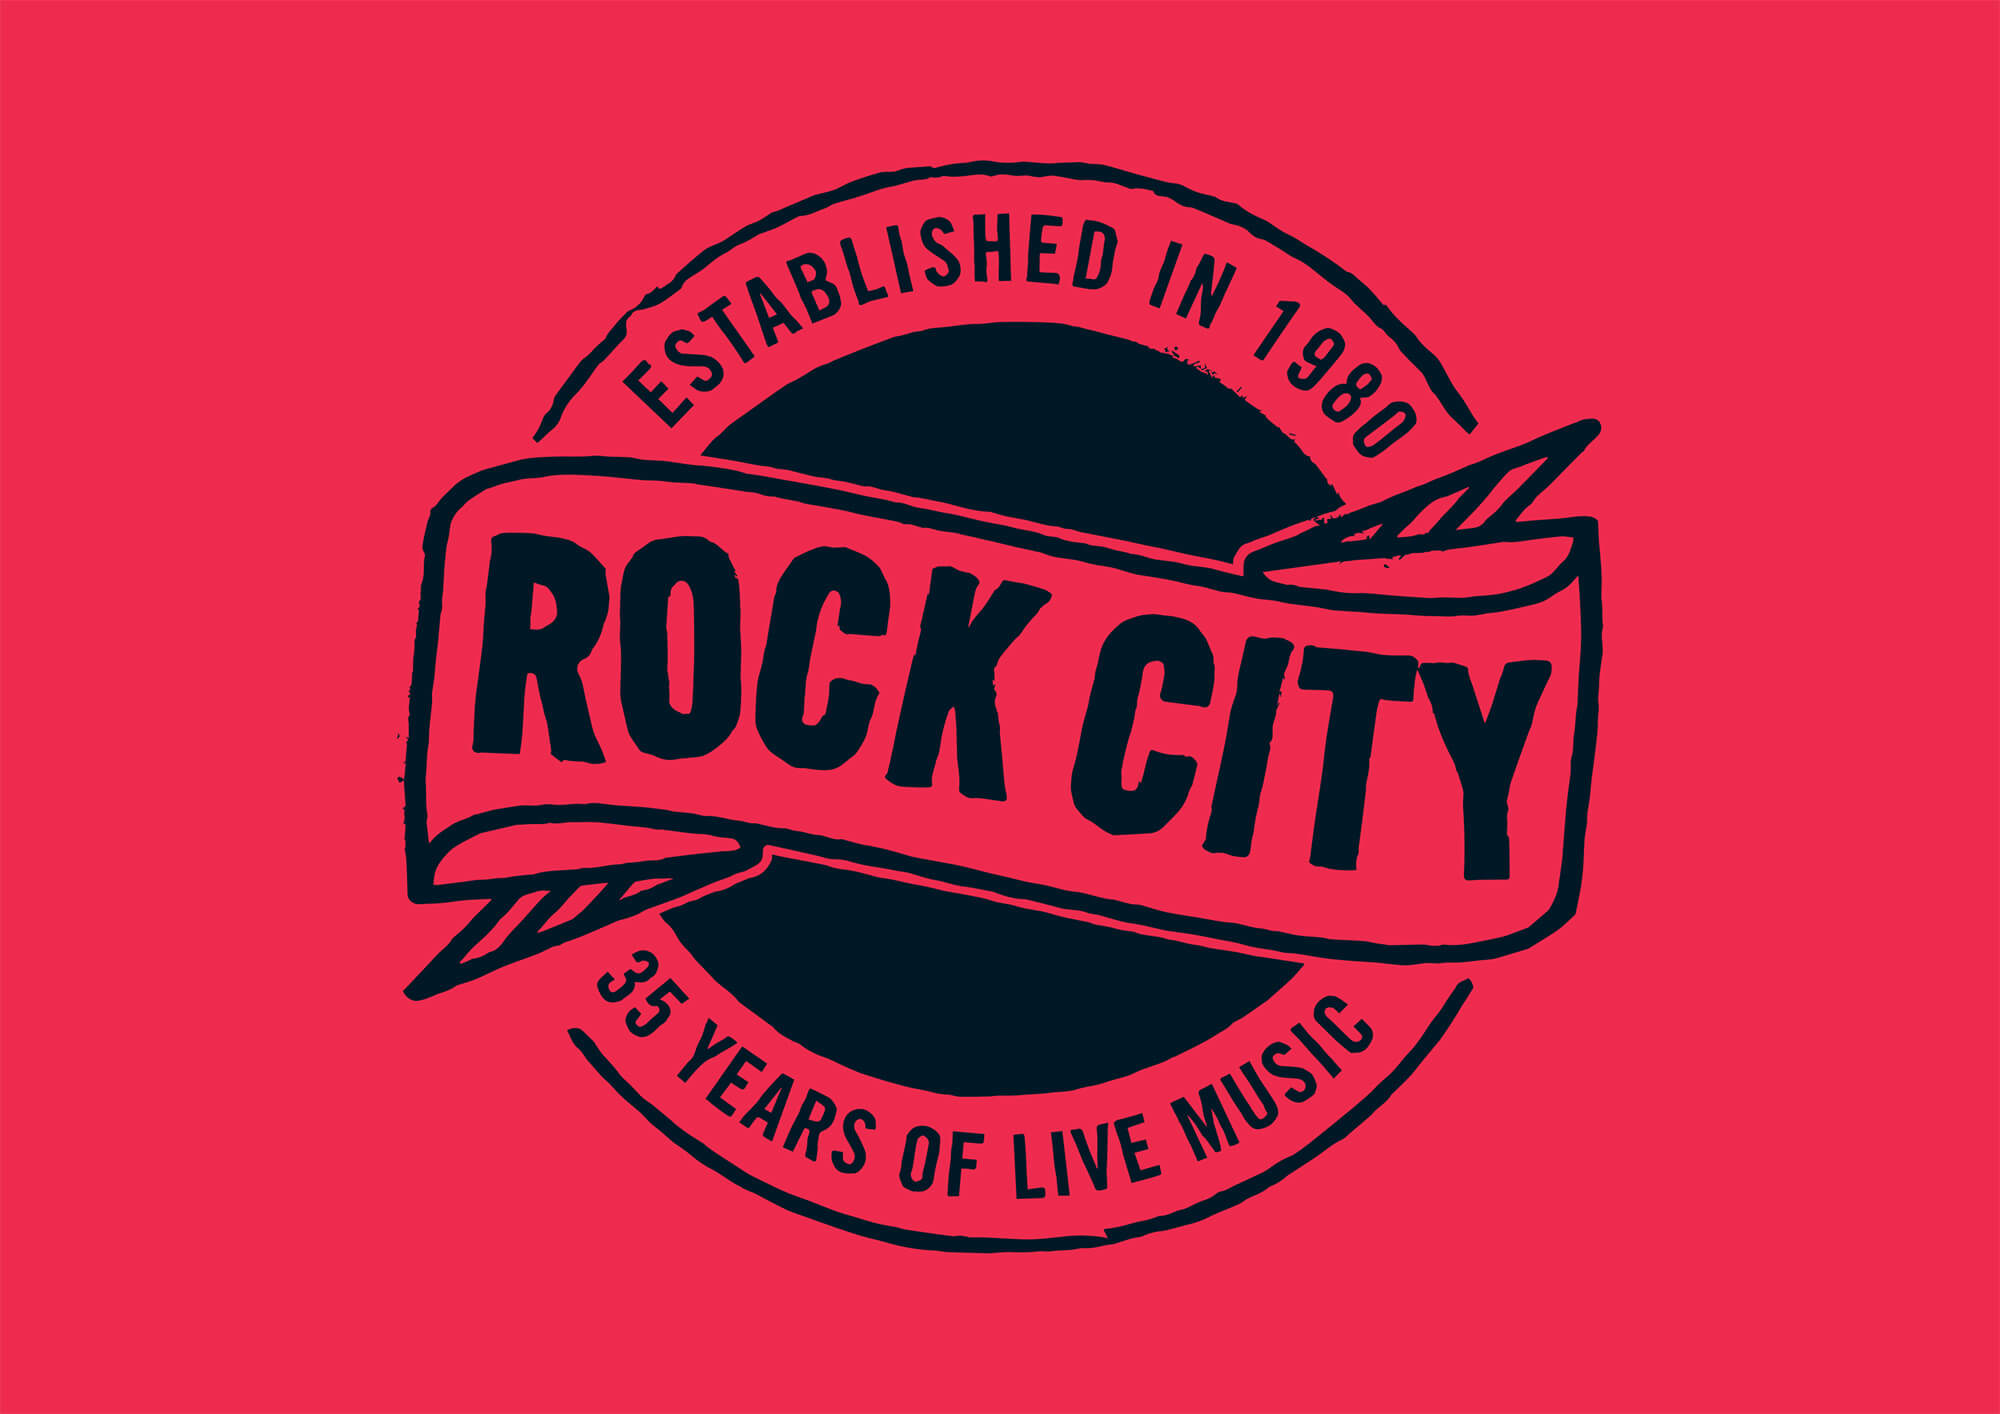 Rock City Nottingham